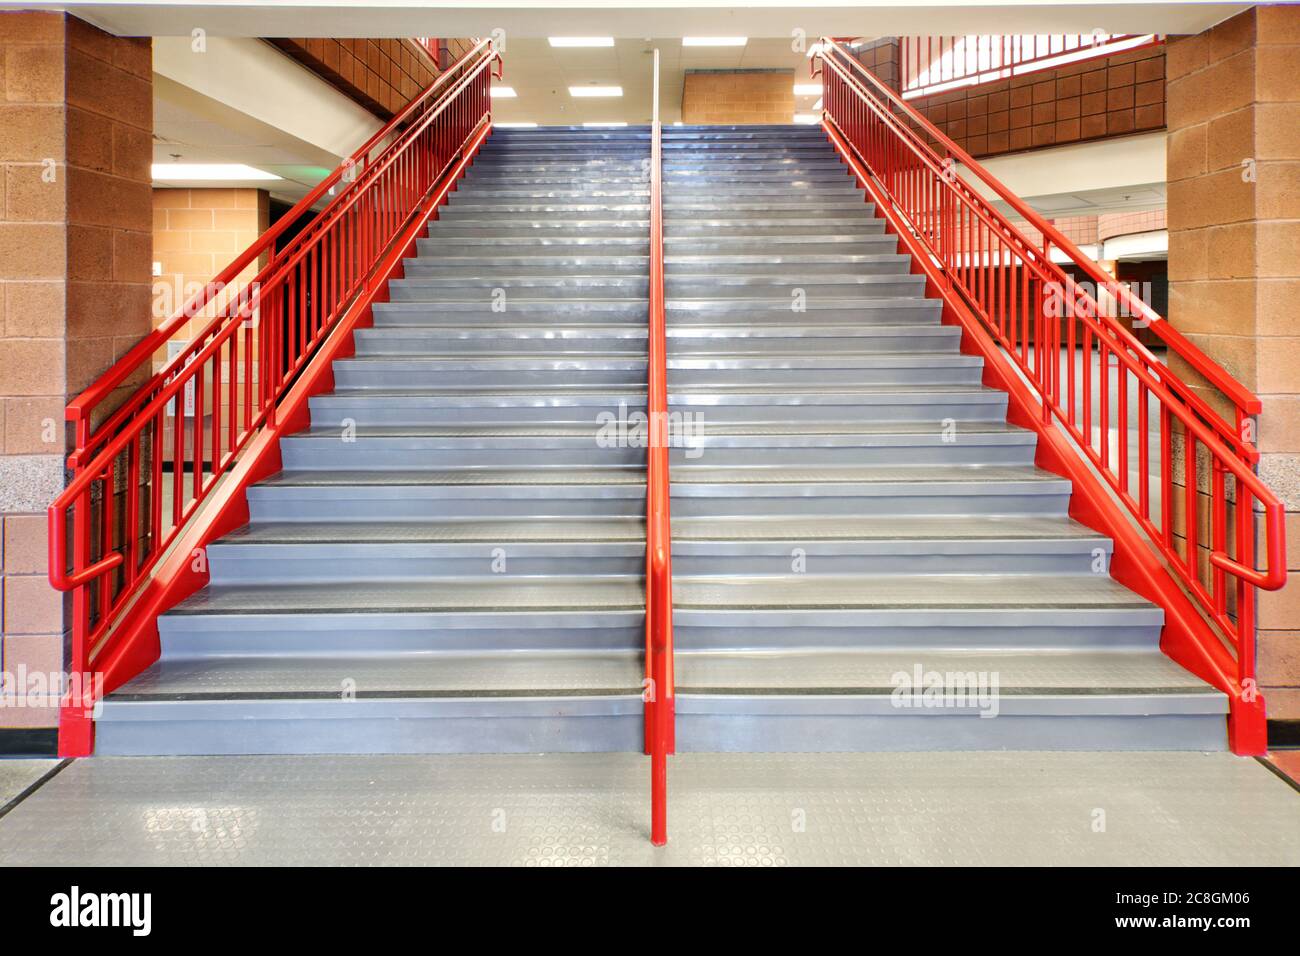 Anti slip floor treads on the steps of an elementary school stairway. Stock Photo